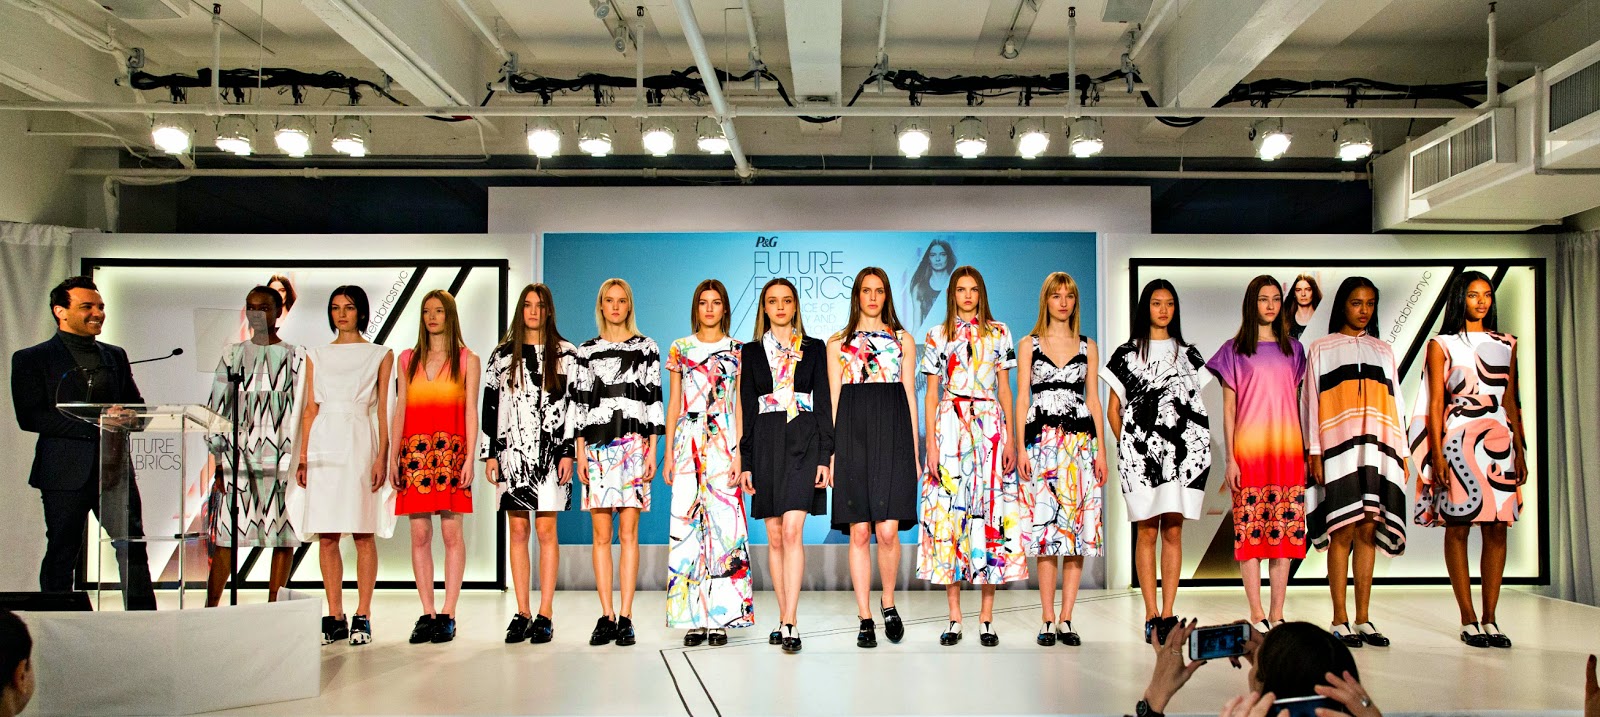 Fashion Show of washable fashion looks by Designer Giles Deacon #PGFutureFabricsNYC